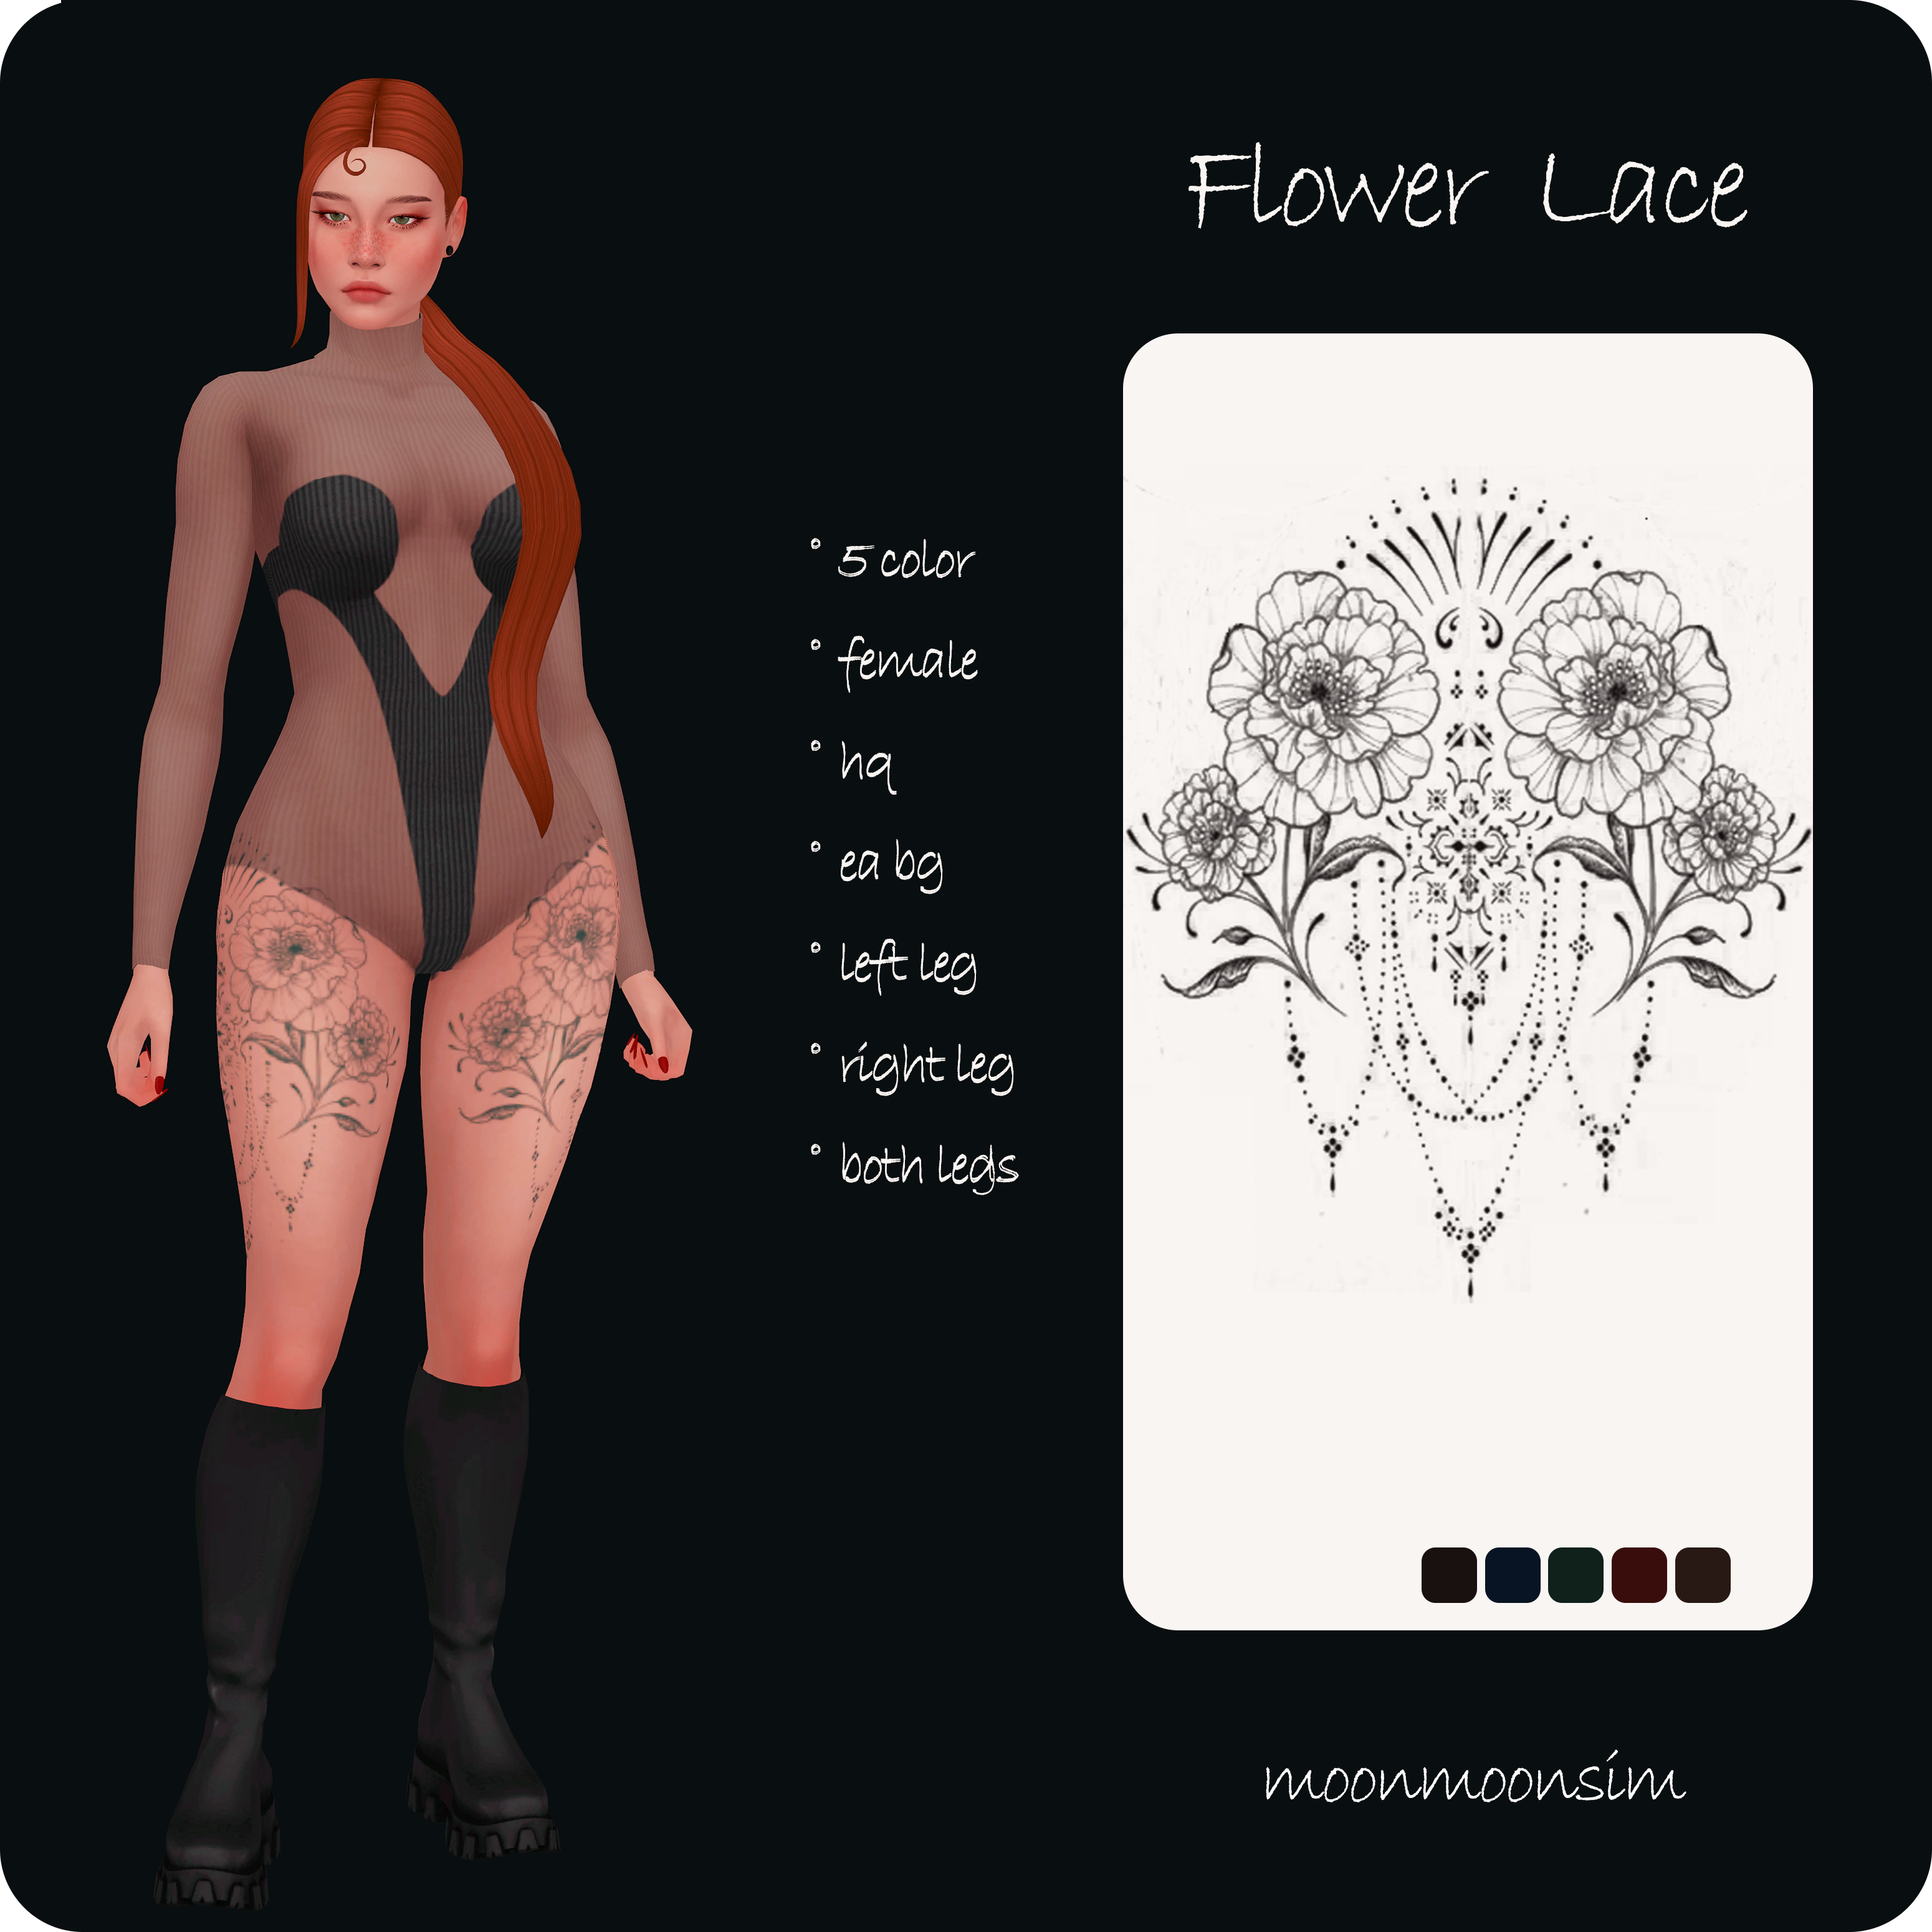 Flower Lace Tattoo project avatar